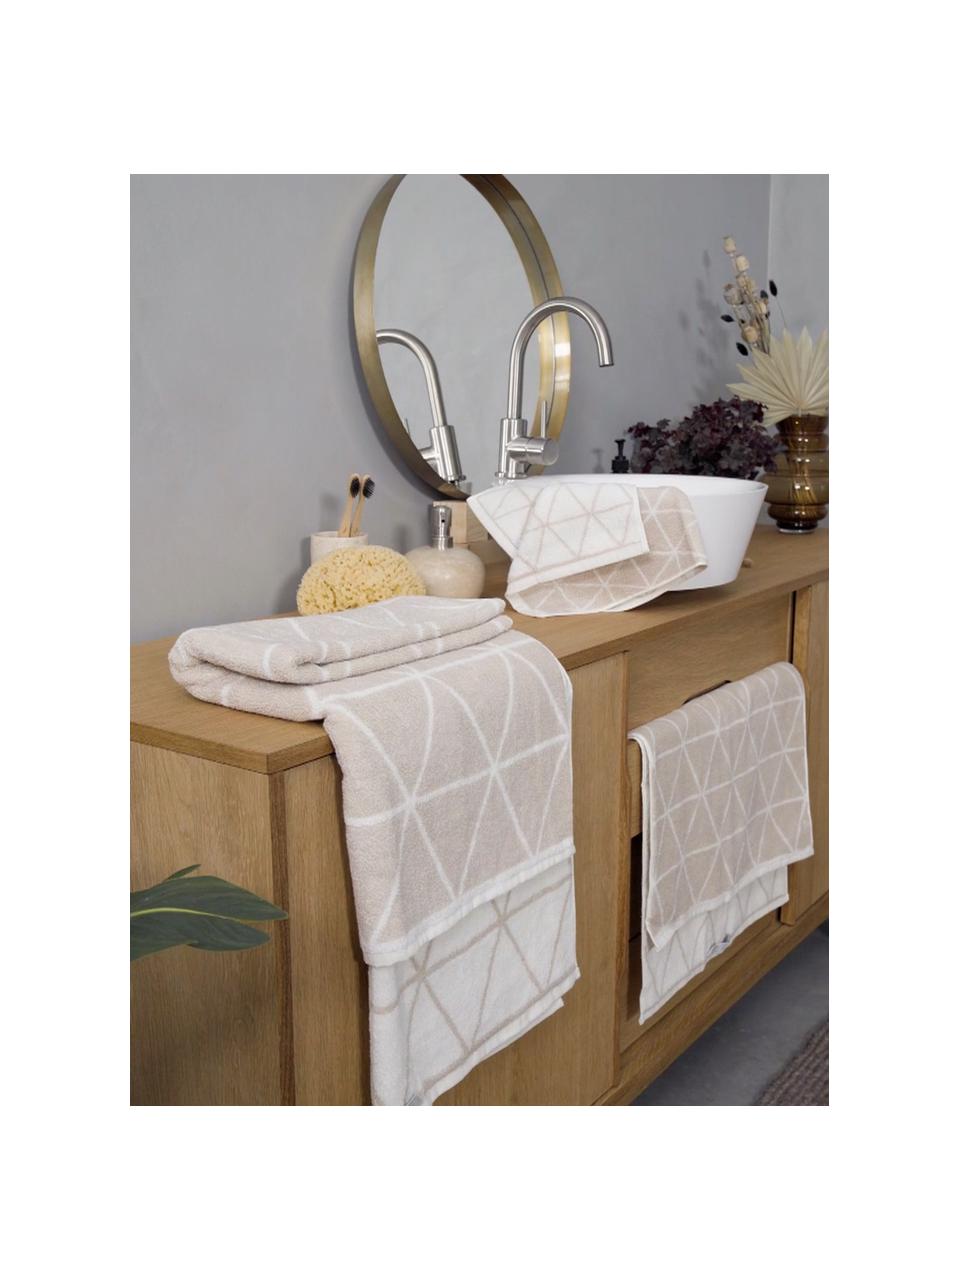 Set 3 asciugamani reversibili con motivo grafico Elina, Beige, bianco crema, Set in varie misure